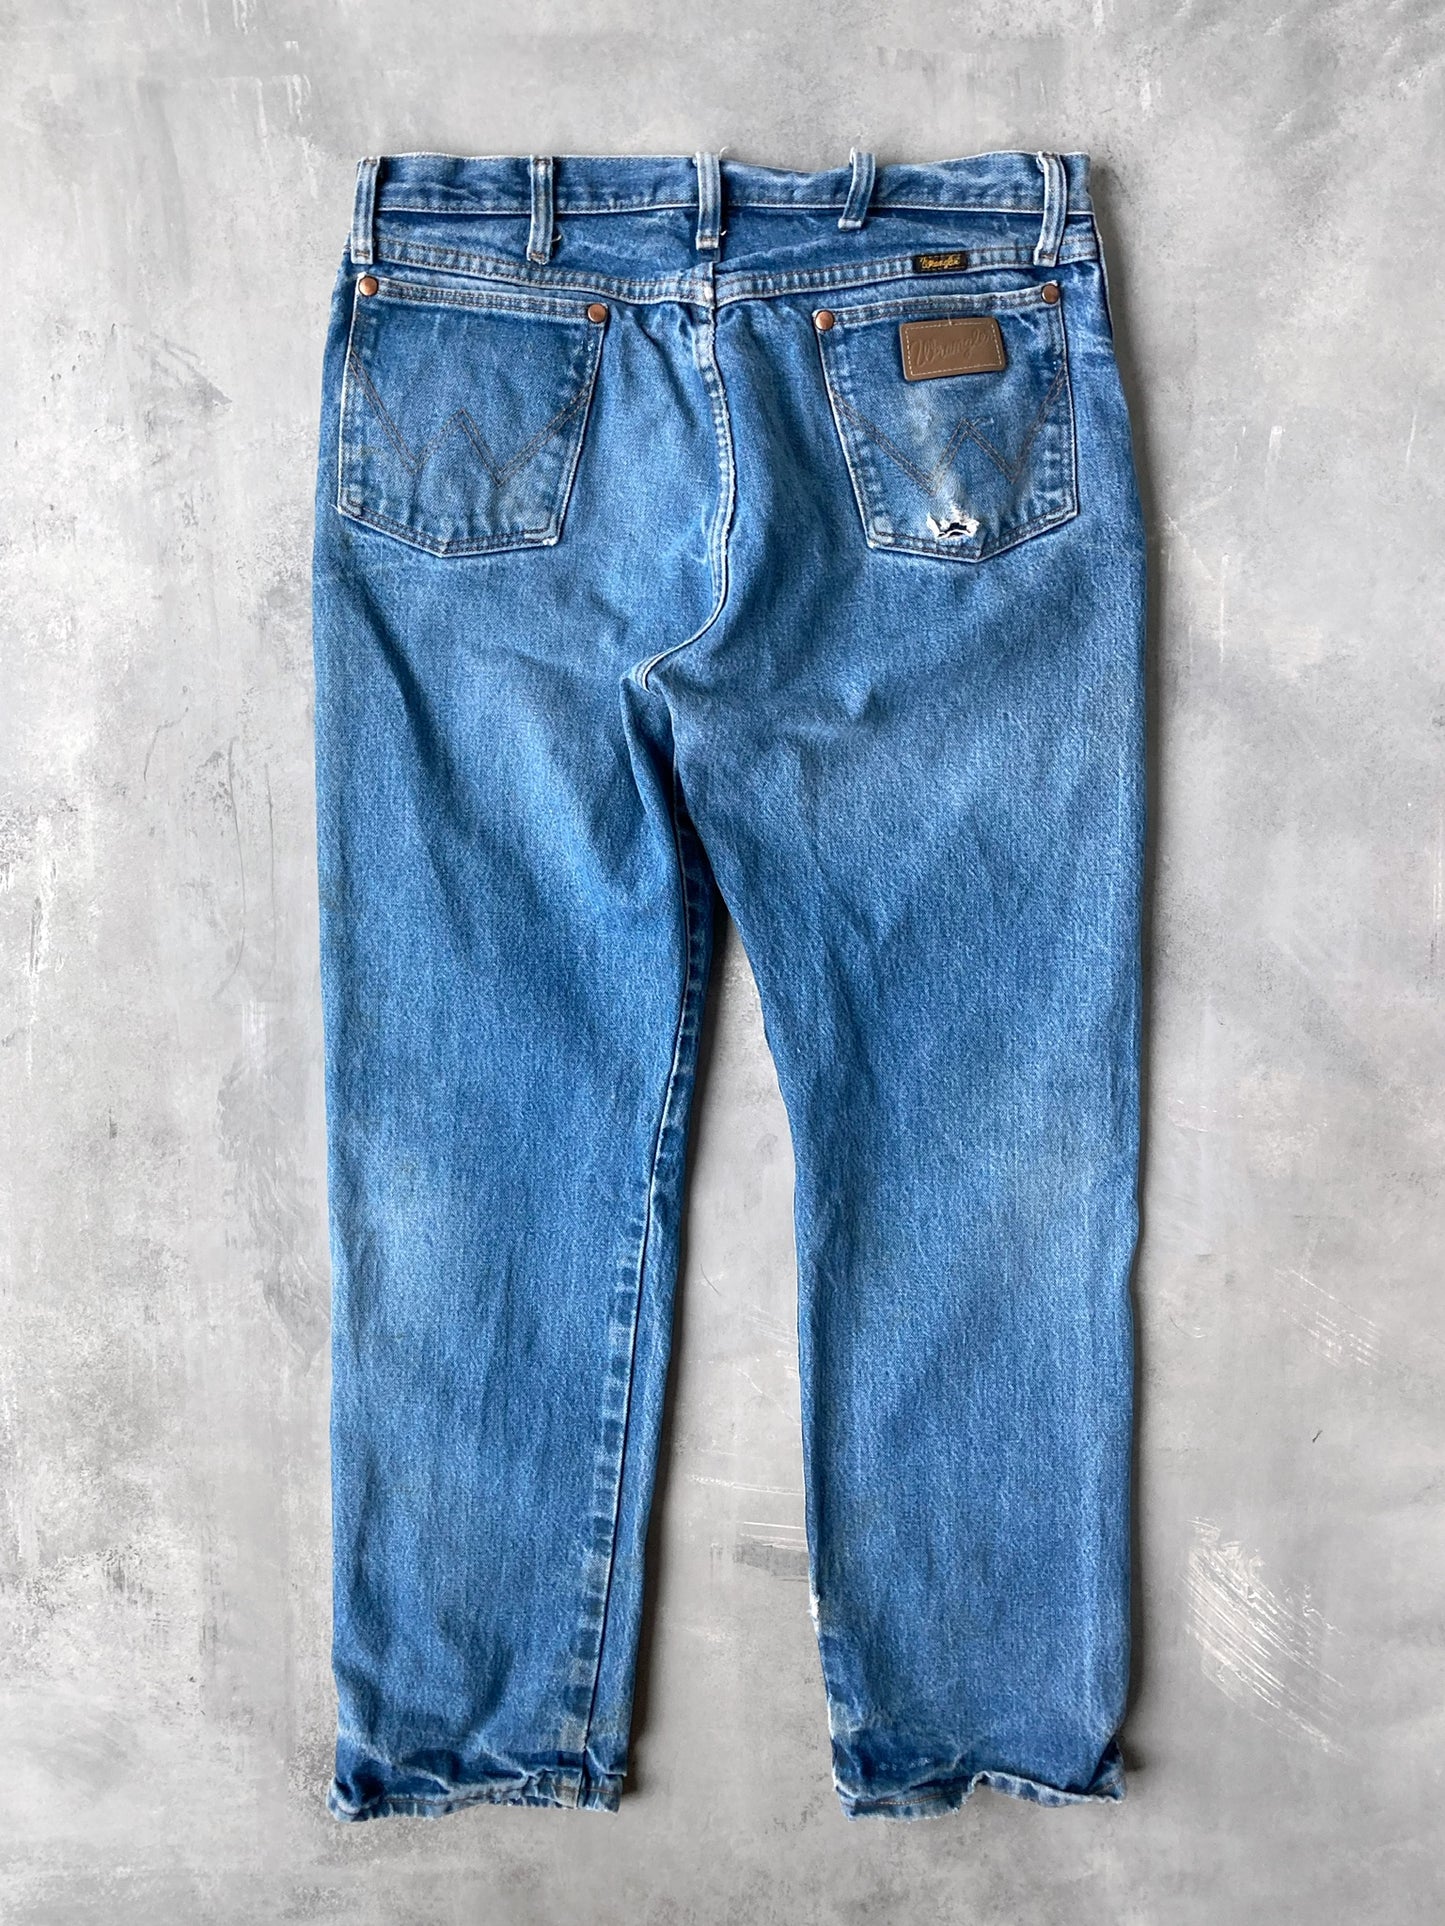 Distressed Wrangler Jeans 00's - 34x31